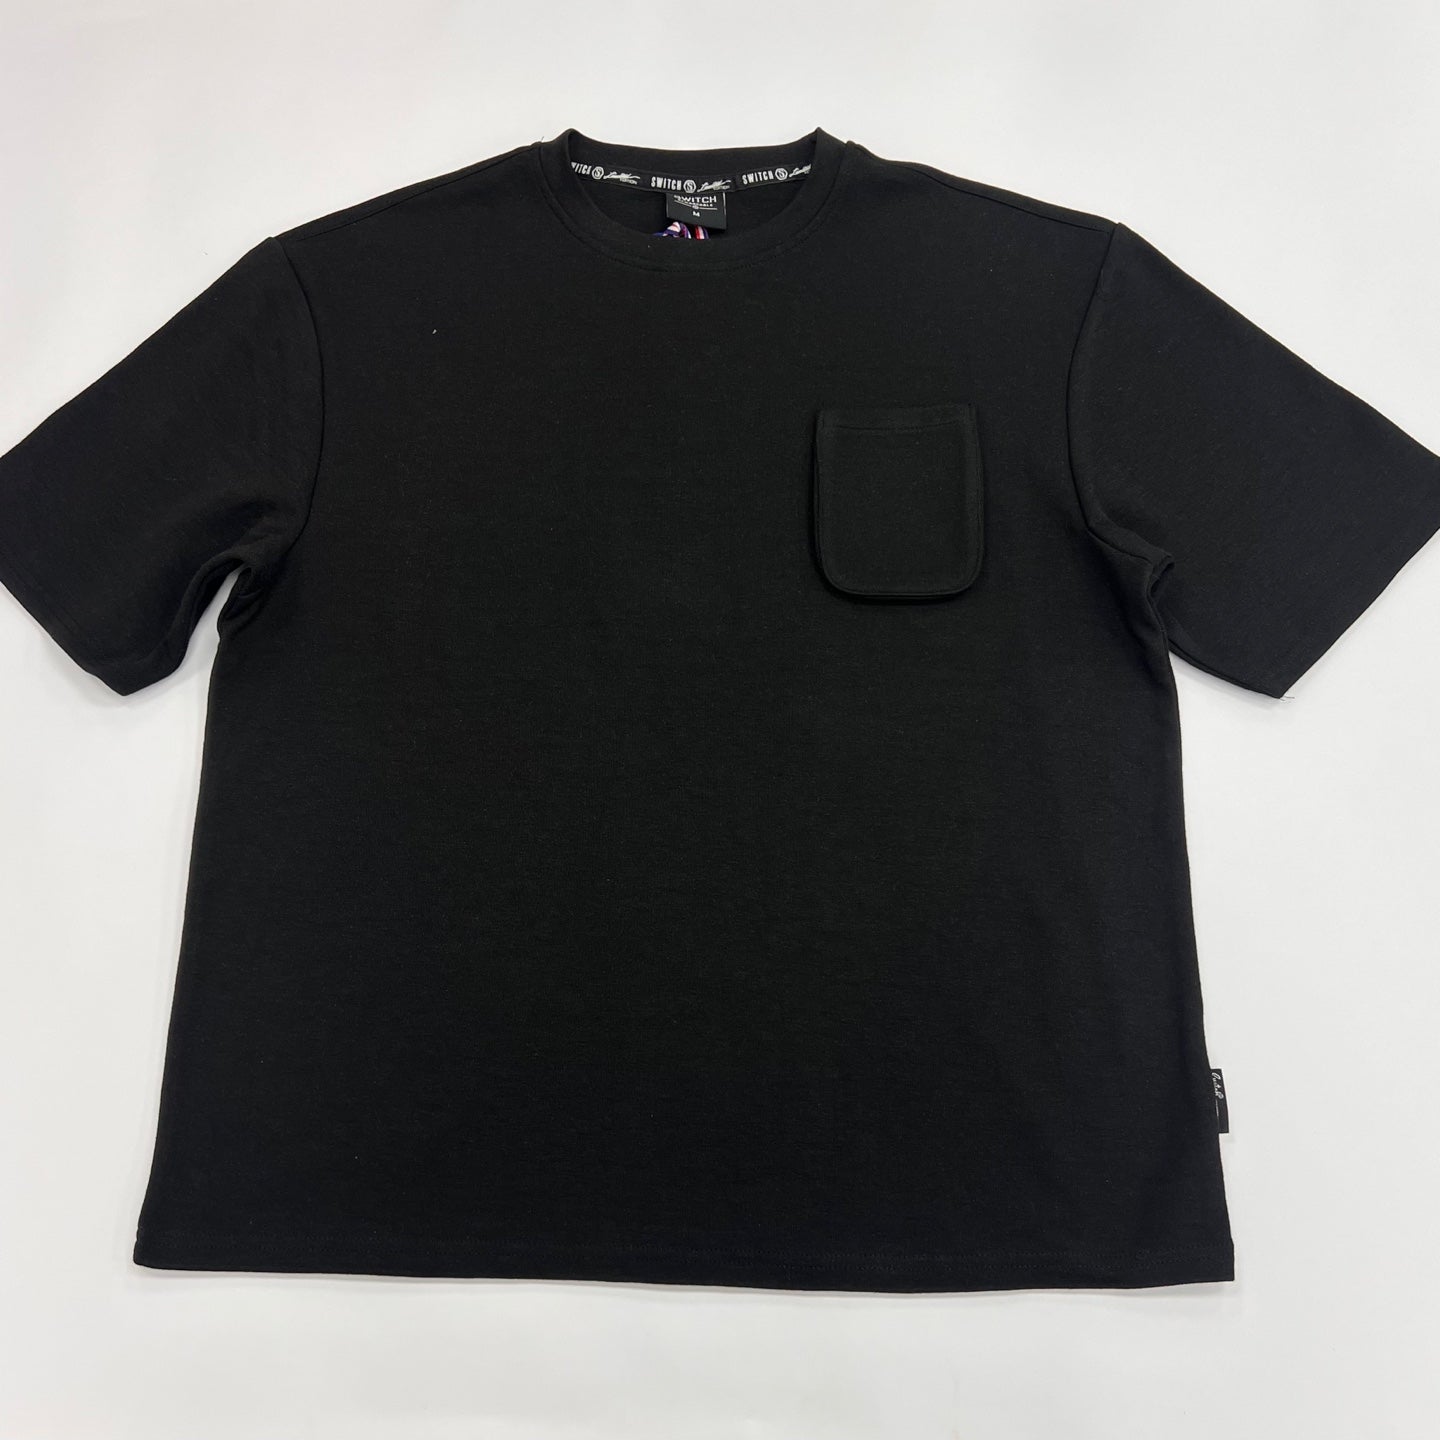 REBELMINDS Soft 3D Pocket Plain T-Shirt Mint / L